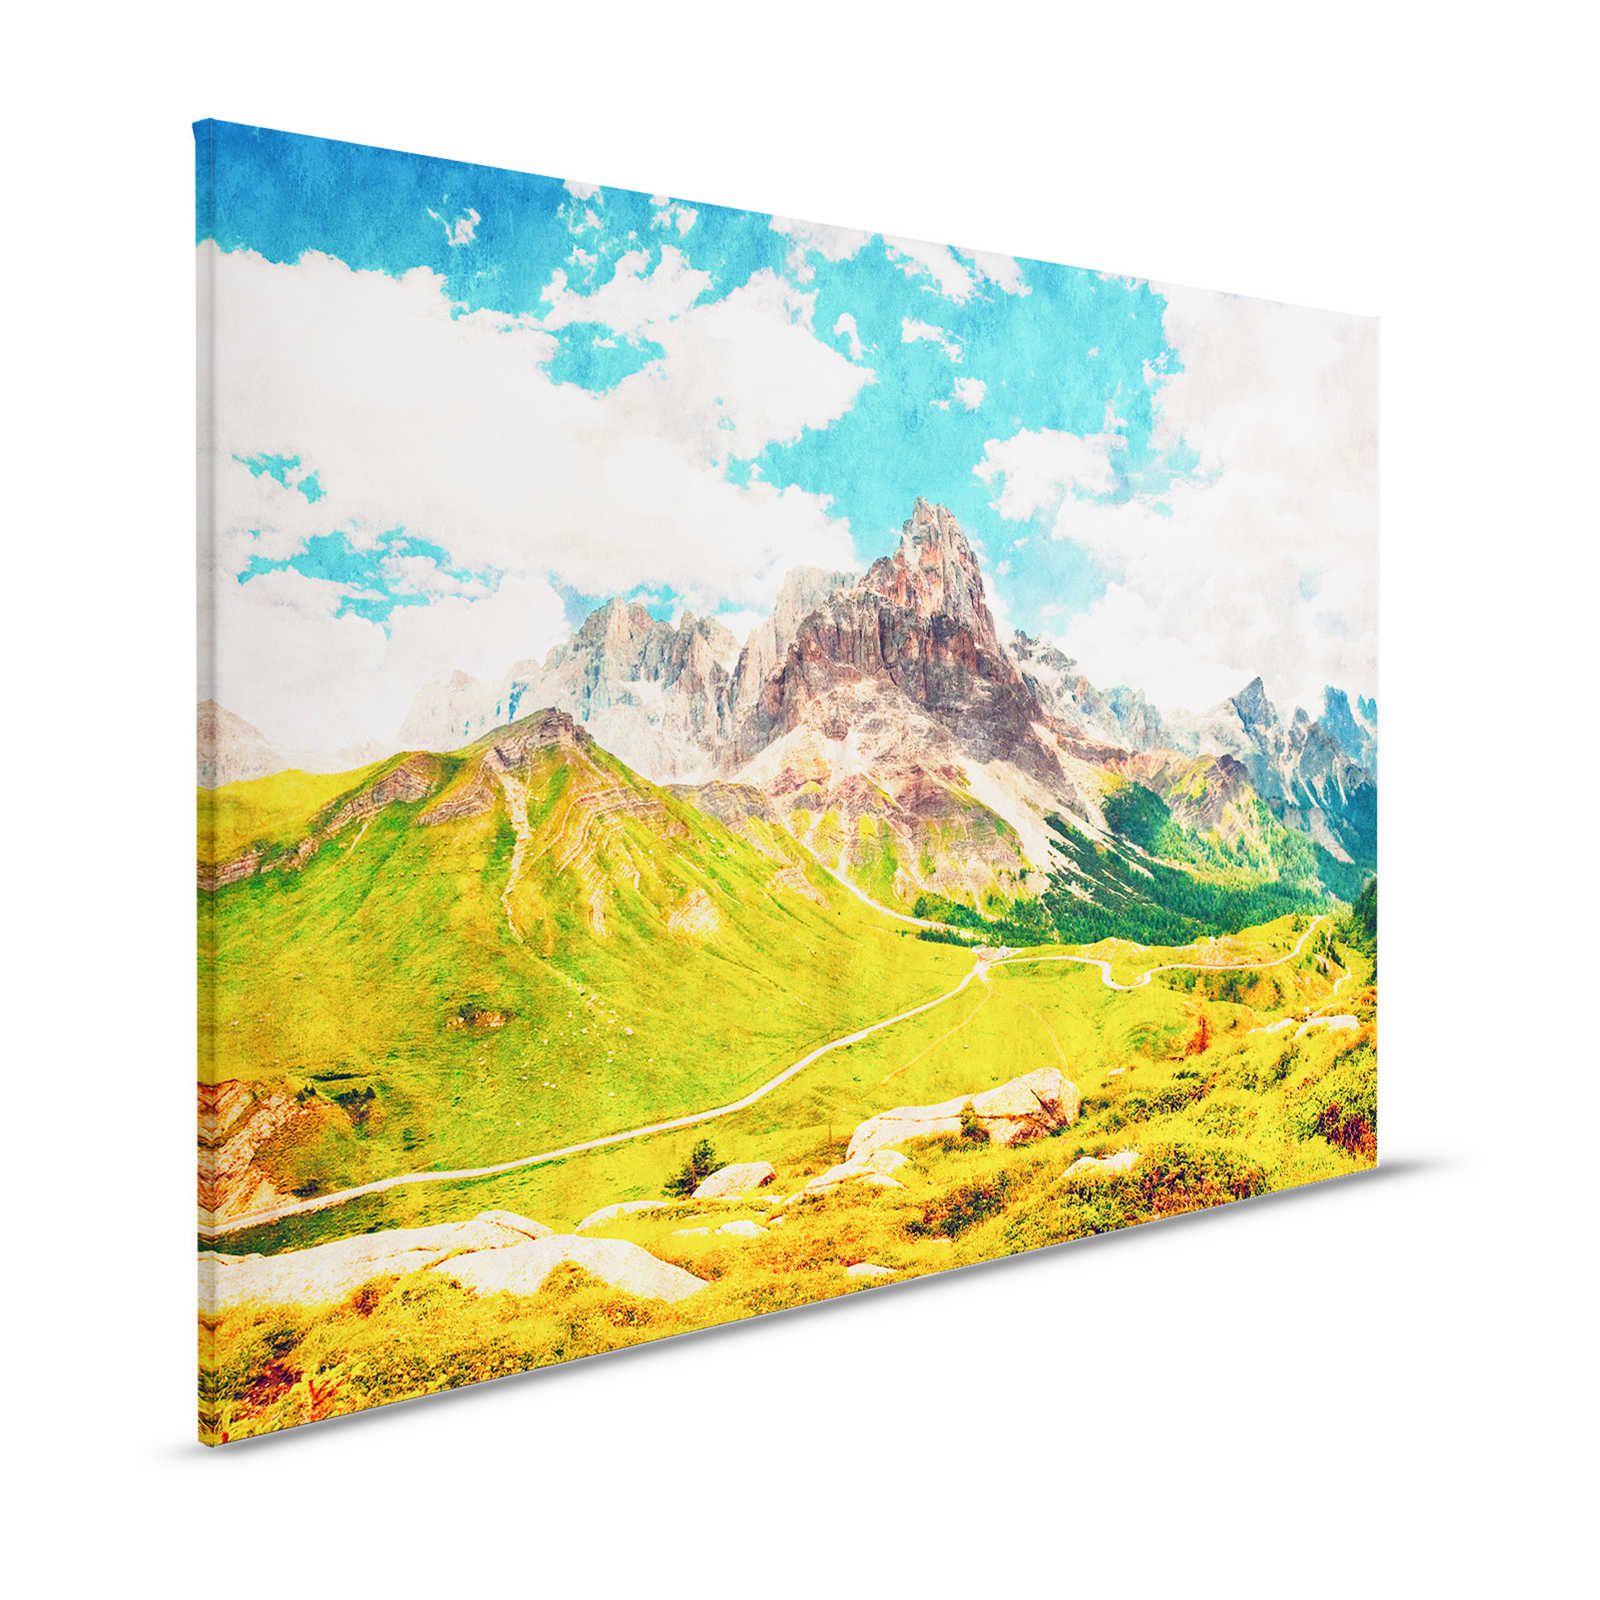 Dolomiti 1 - Canvas painting Dolomites Retro Photography - 1.20 m x 0.80 m
